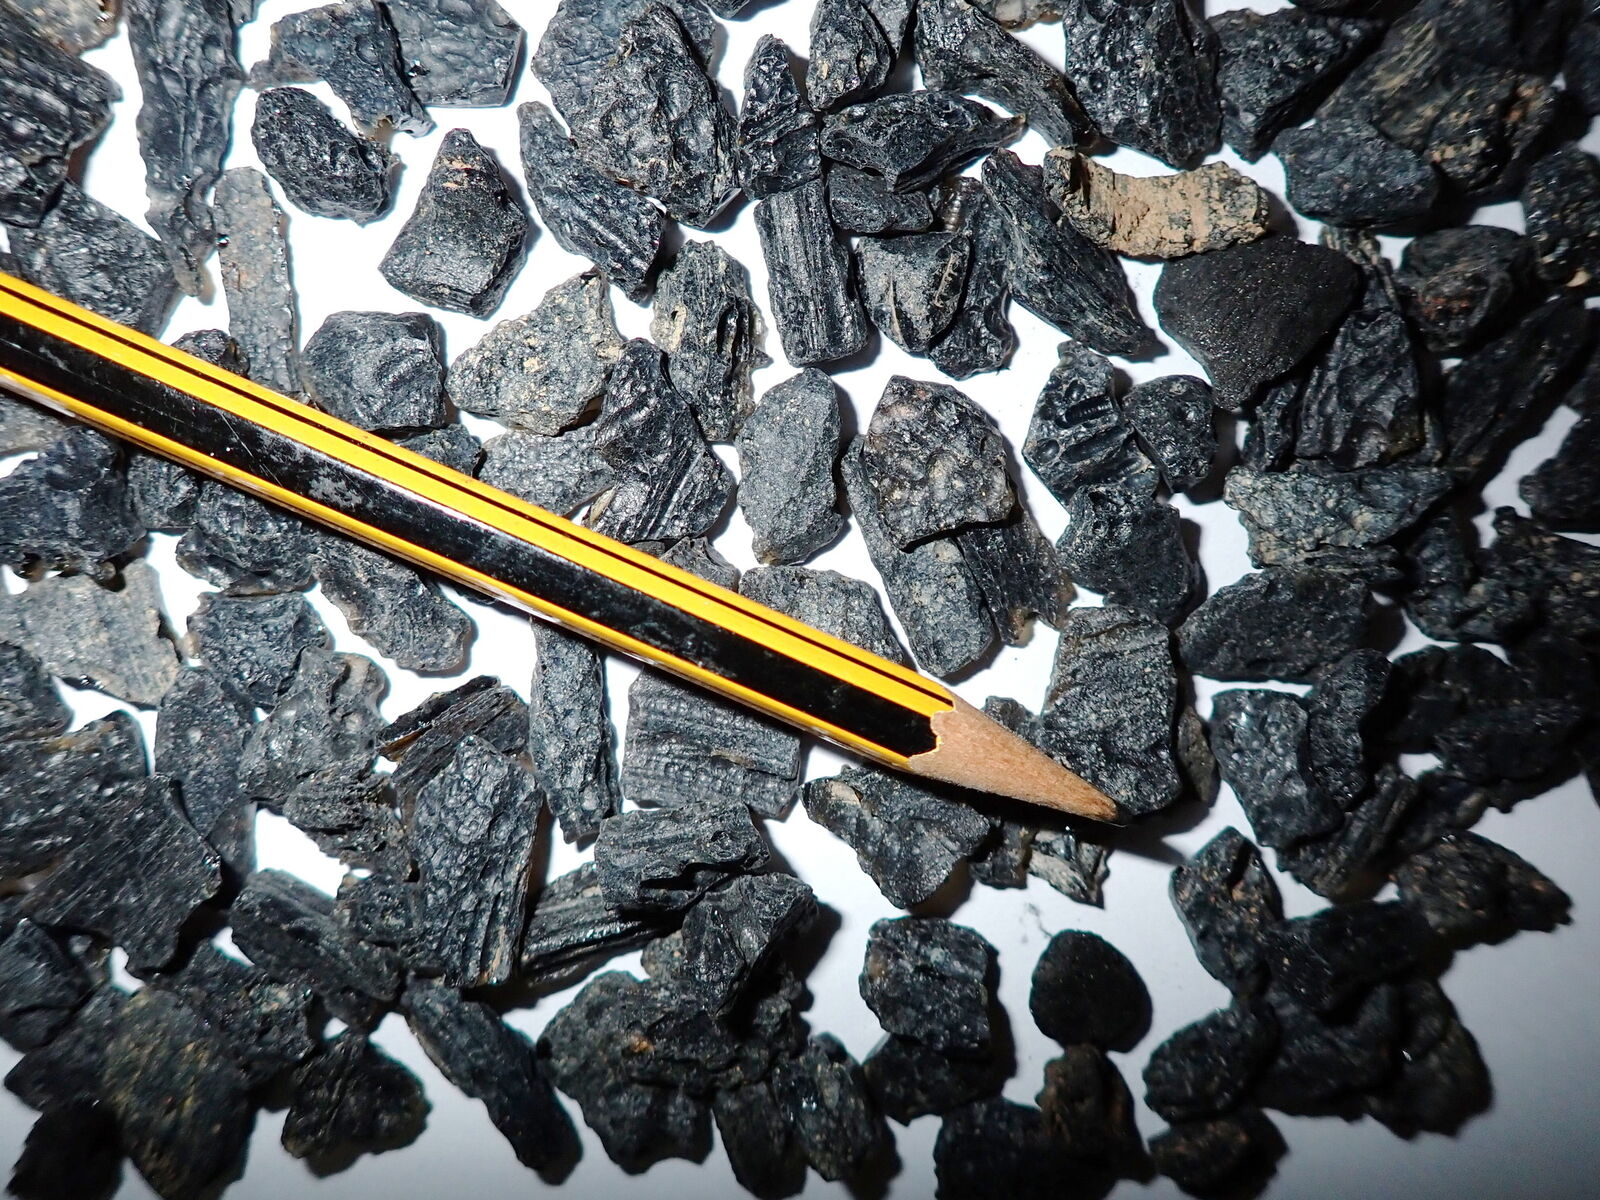 Black Indochinite Tektite Stone 0.1 to 1 Gram Very Small Size Pieces 40 Gram Lot